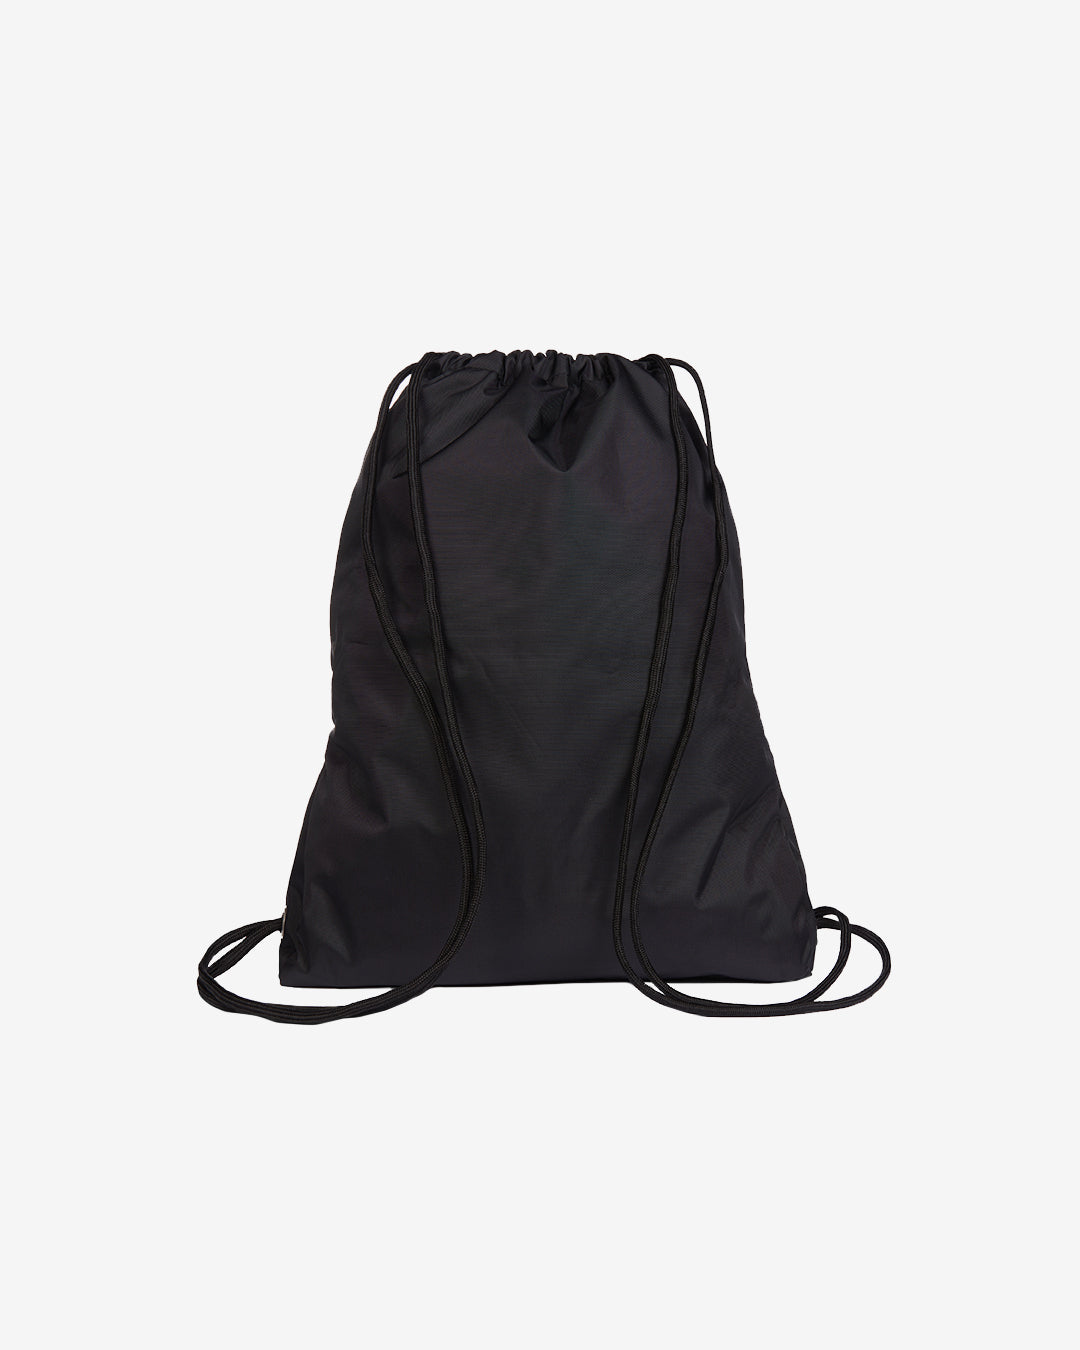 U:0218 - Gym Bag - Black